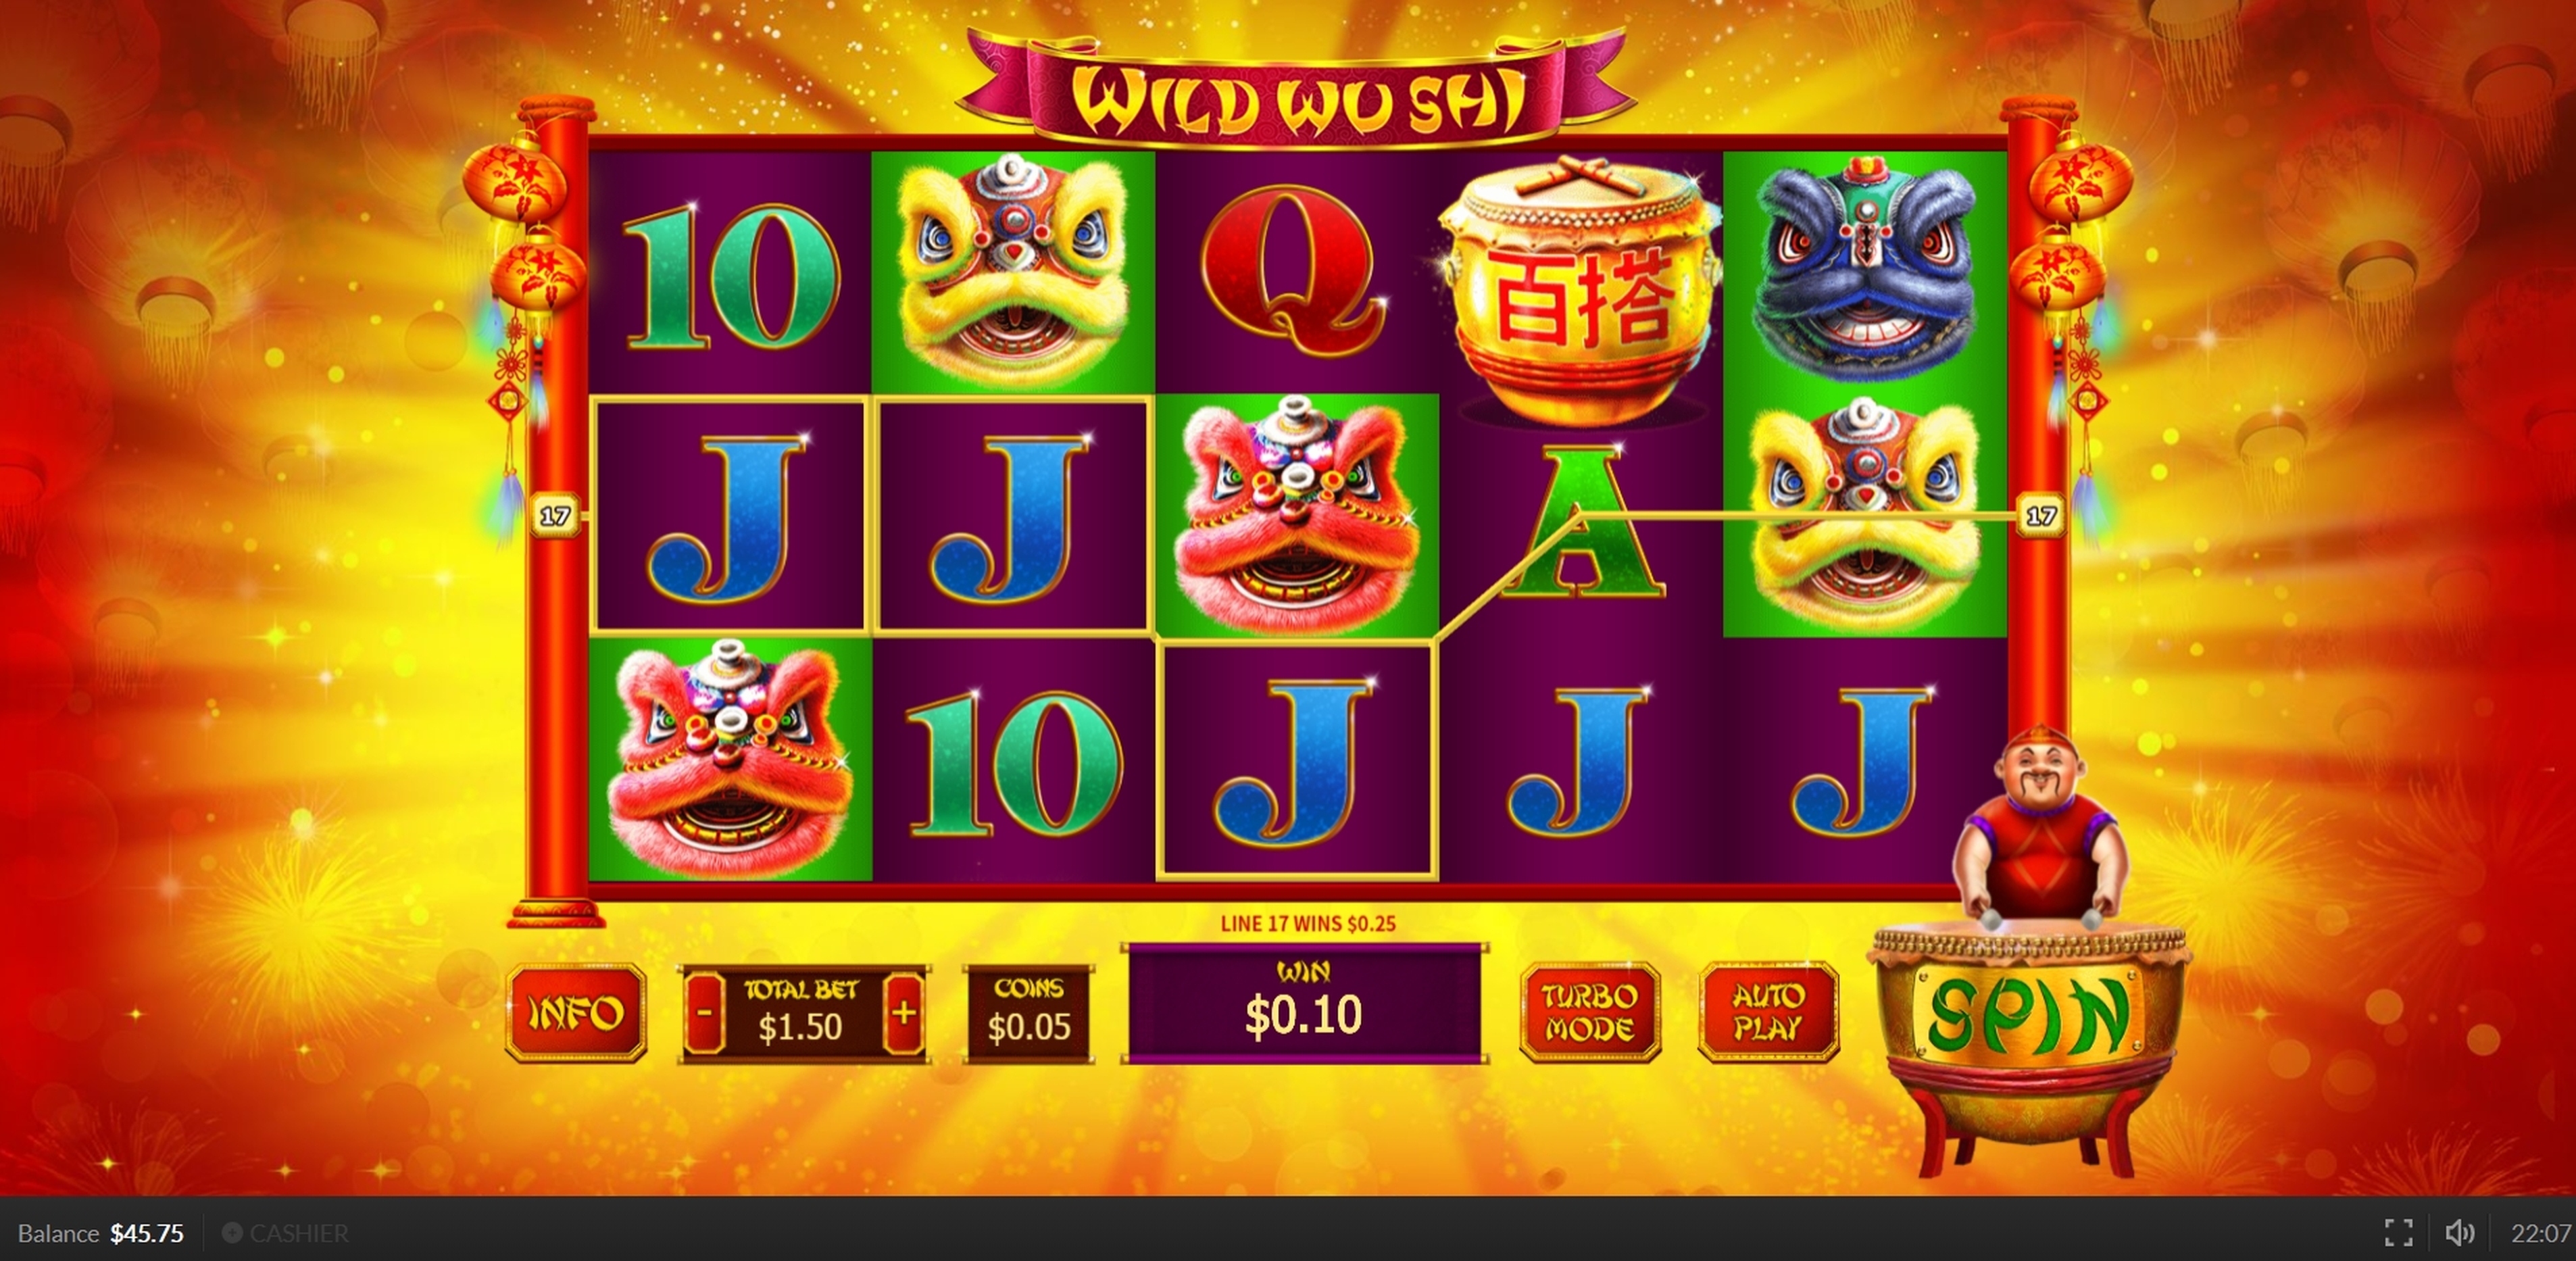 Win Money in Wild Wu Shi Free Slot Game by Skywind